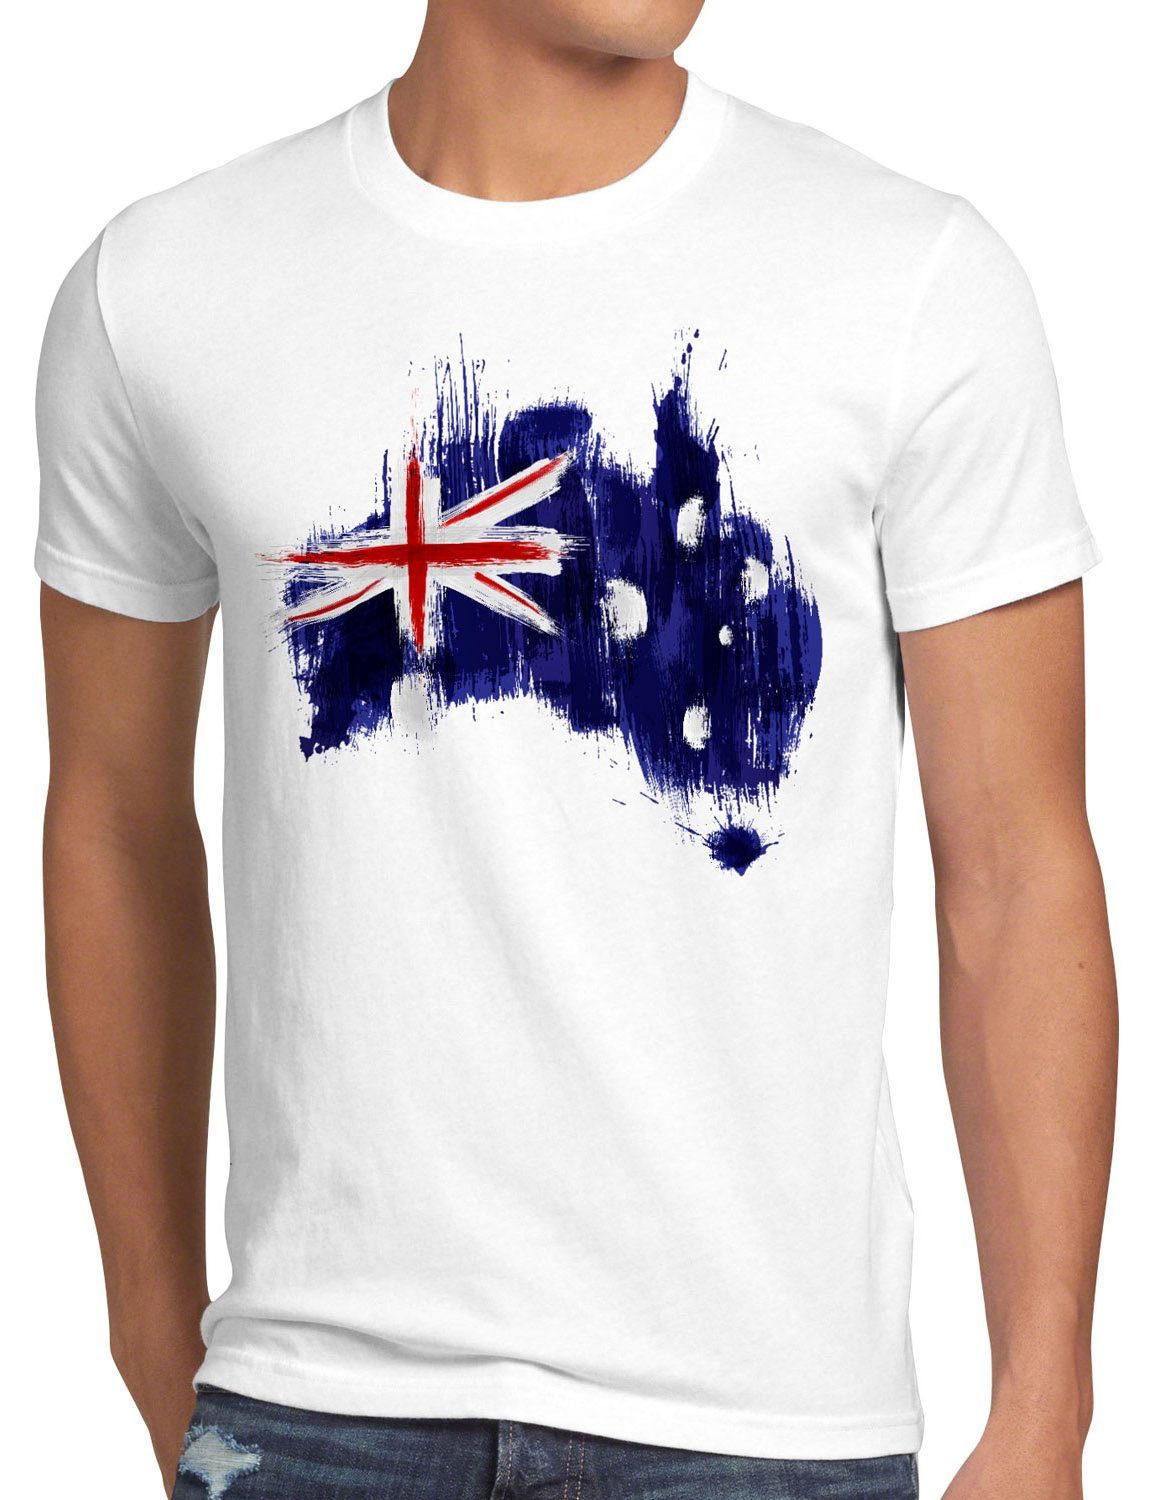 Flagge T-Shirt Herren Australia Fahne Australien Sport EM Print-Shirt style3 weiß WM Fußball